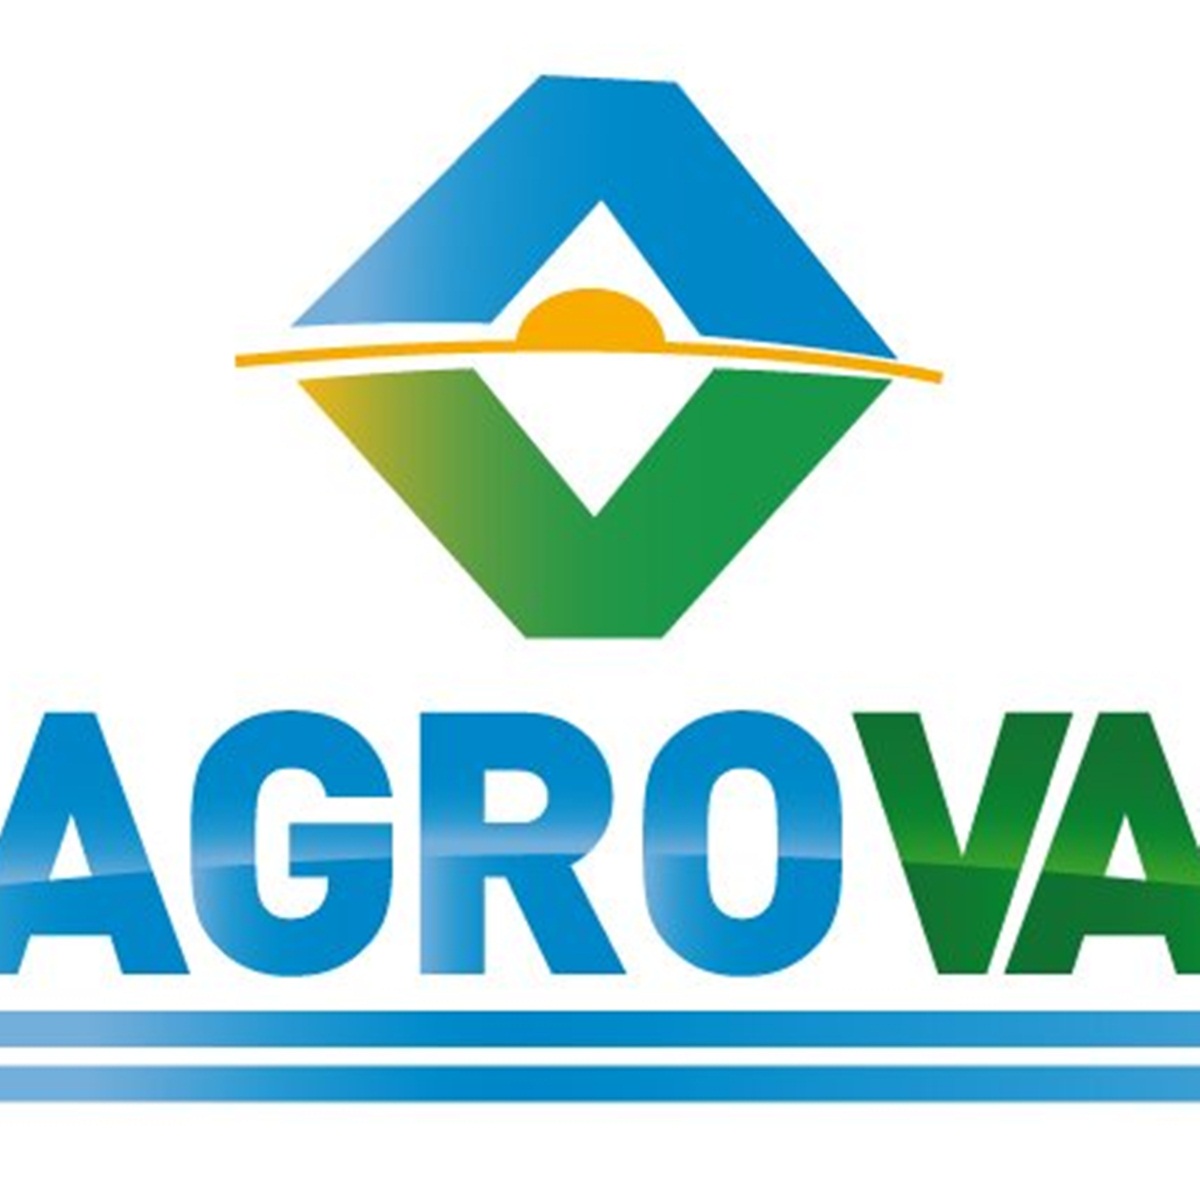 #Podcast Agro VA | 08.05: Alberto Morelli @MAIZYSORGO; economista Jorge Ingaramo; S.Bollier Ad Blick